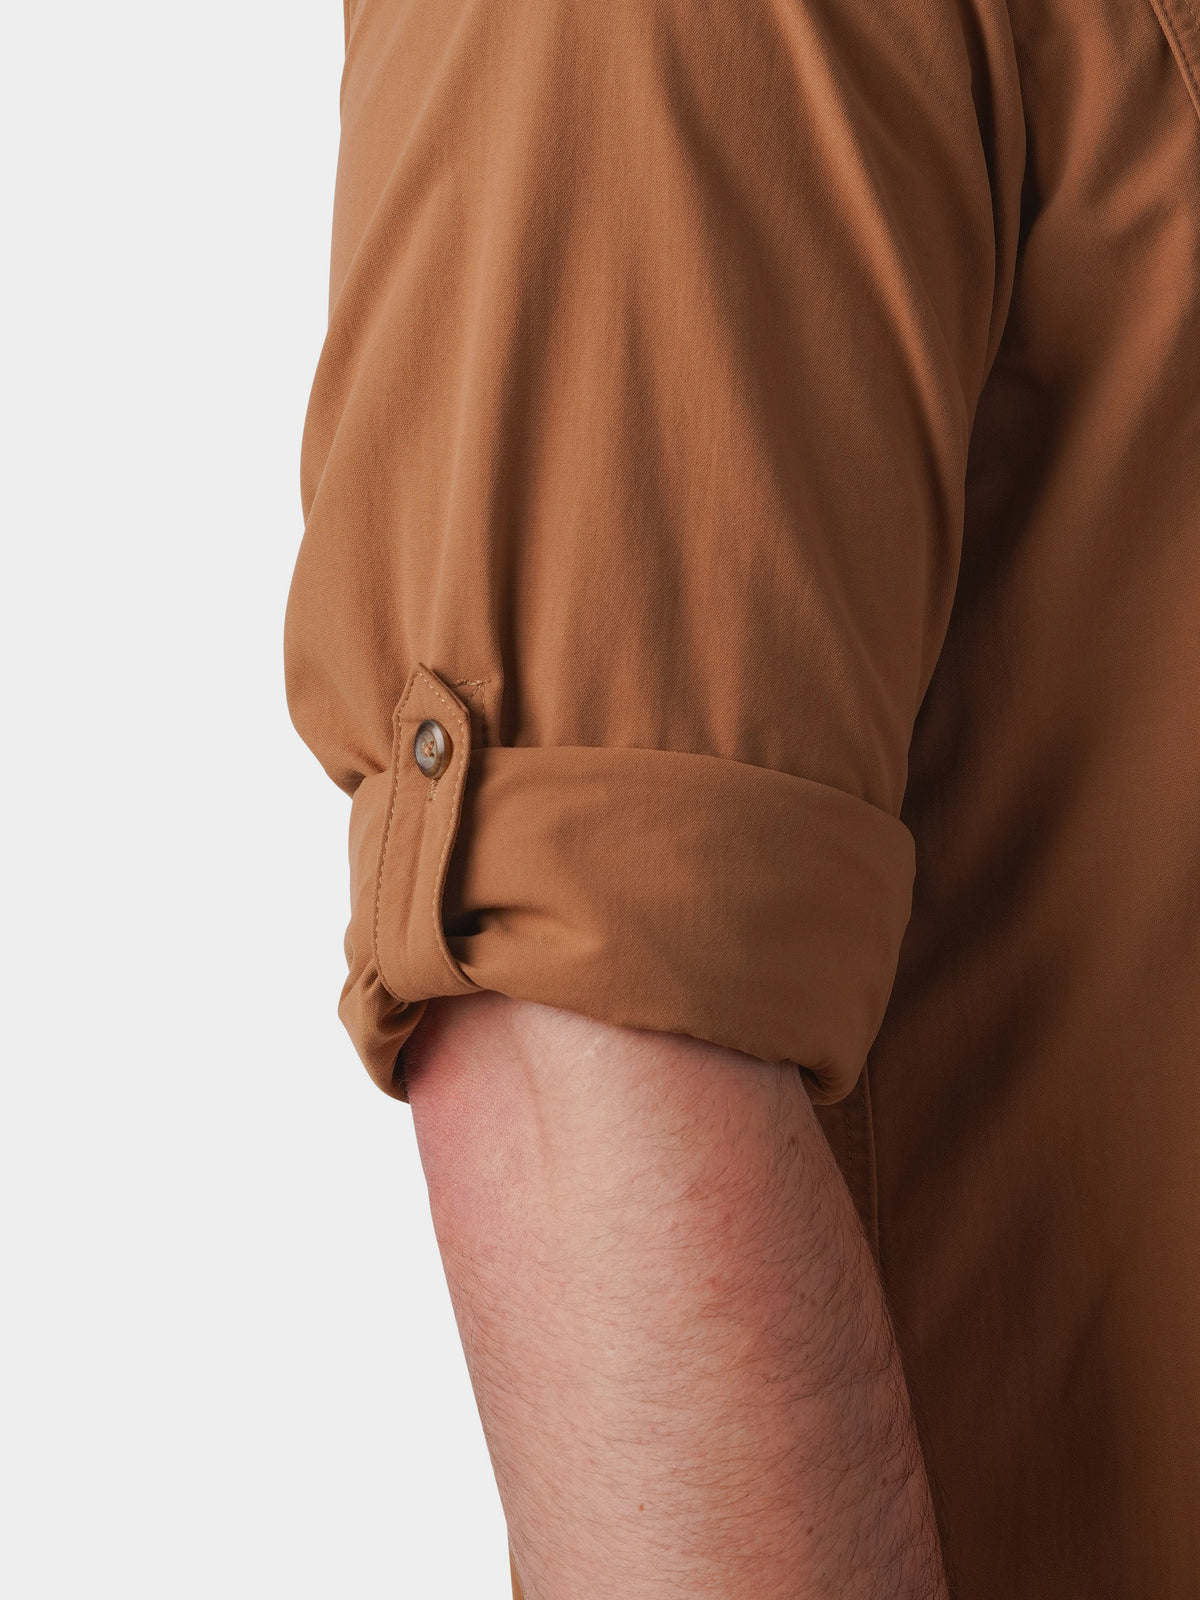 Lightweight Hunting Shirt Long Sleeve - Pintail Brown